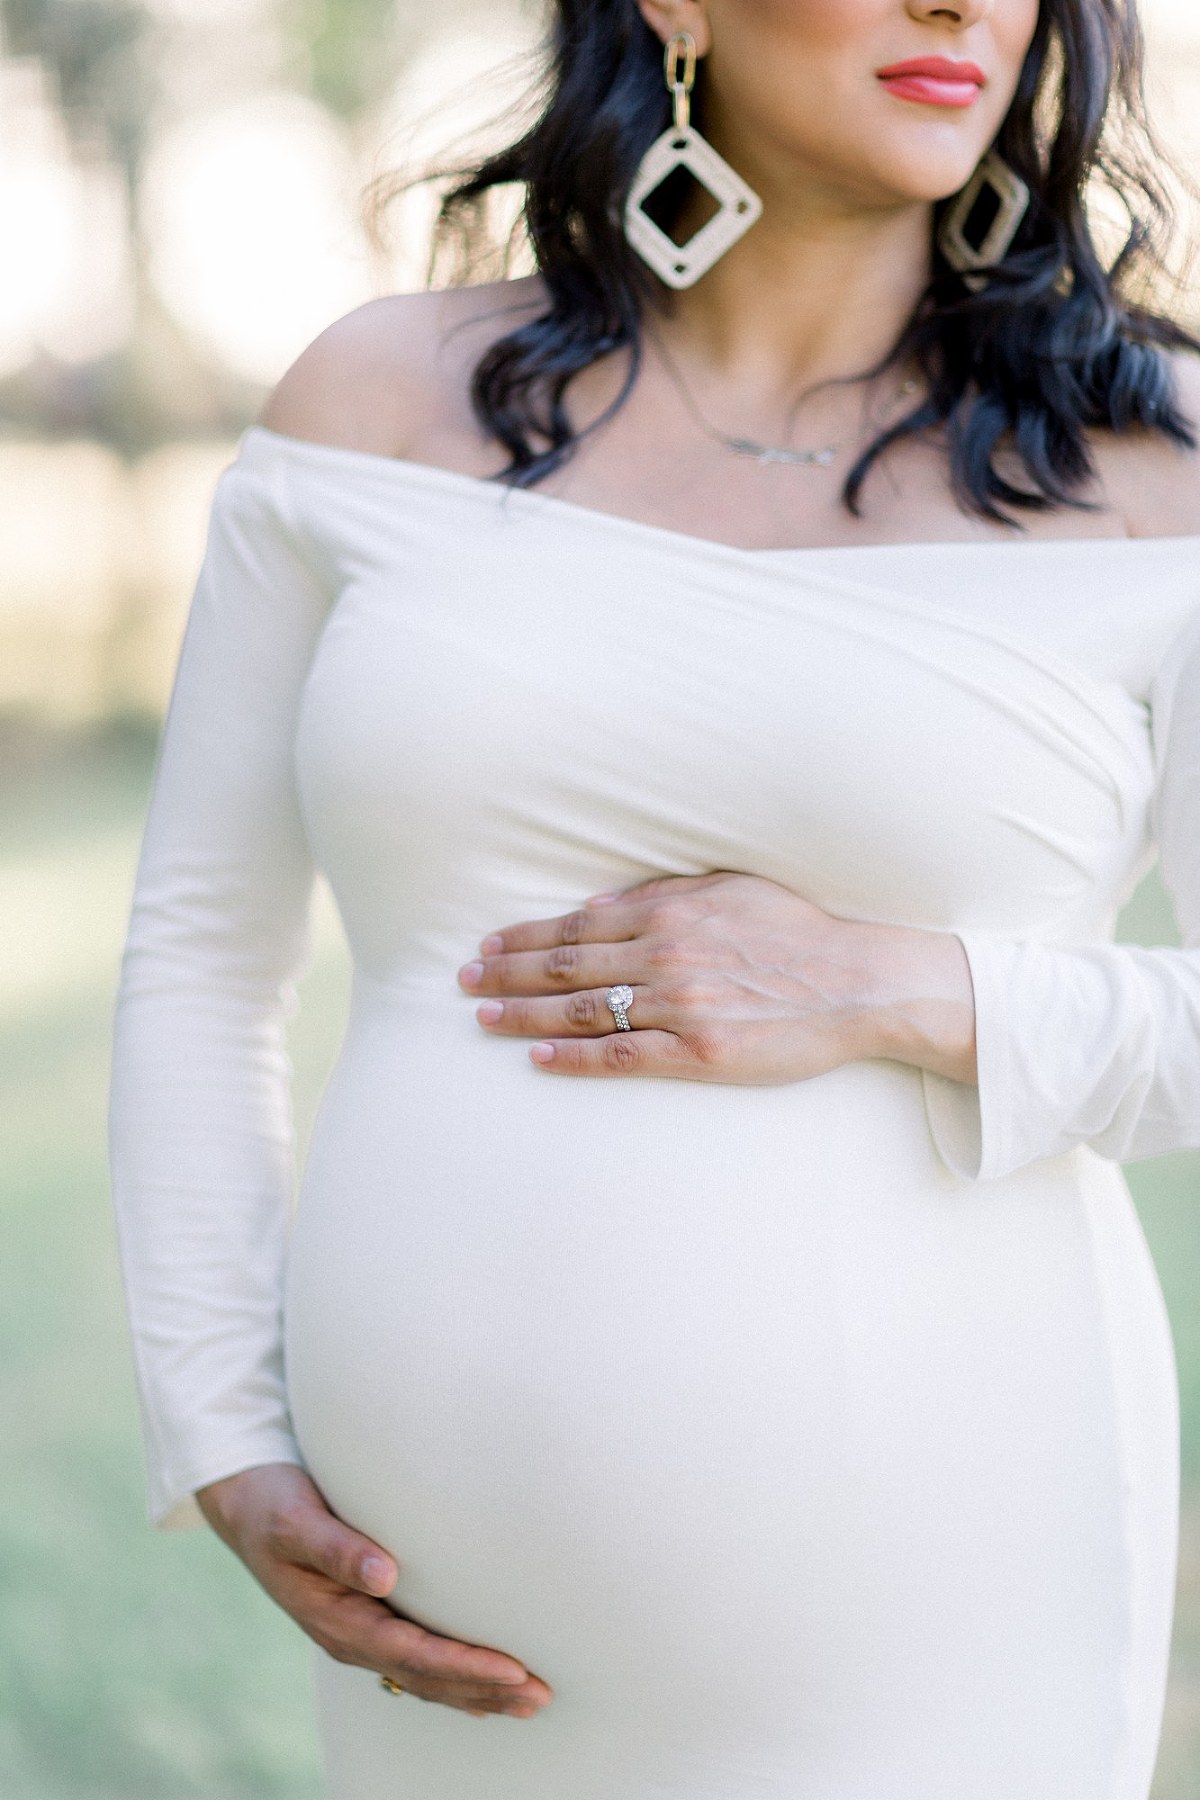 pregnant woman in a white dress